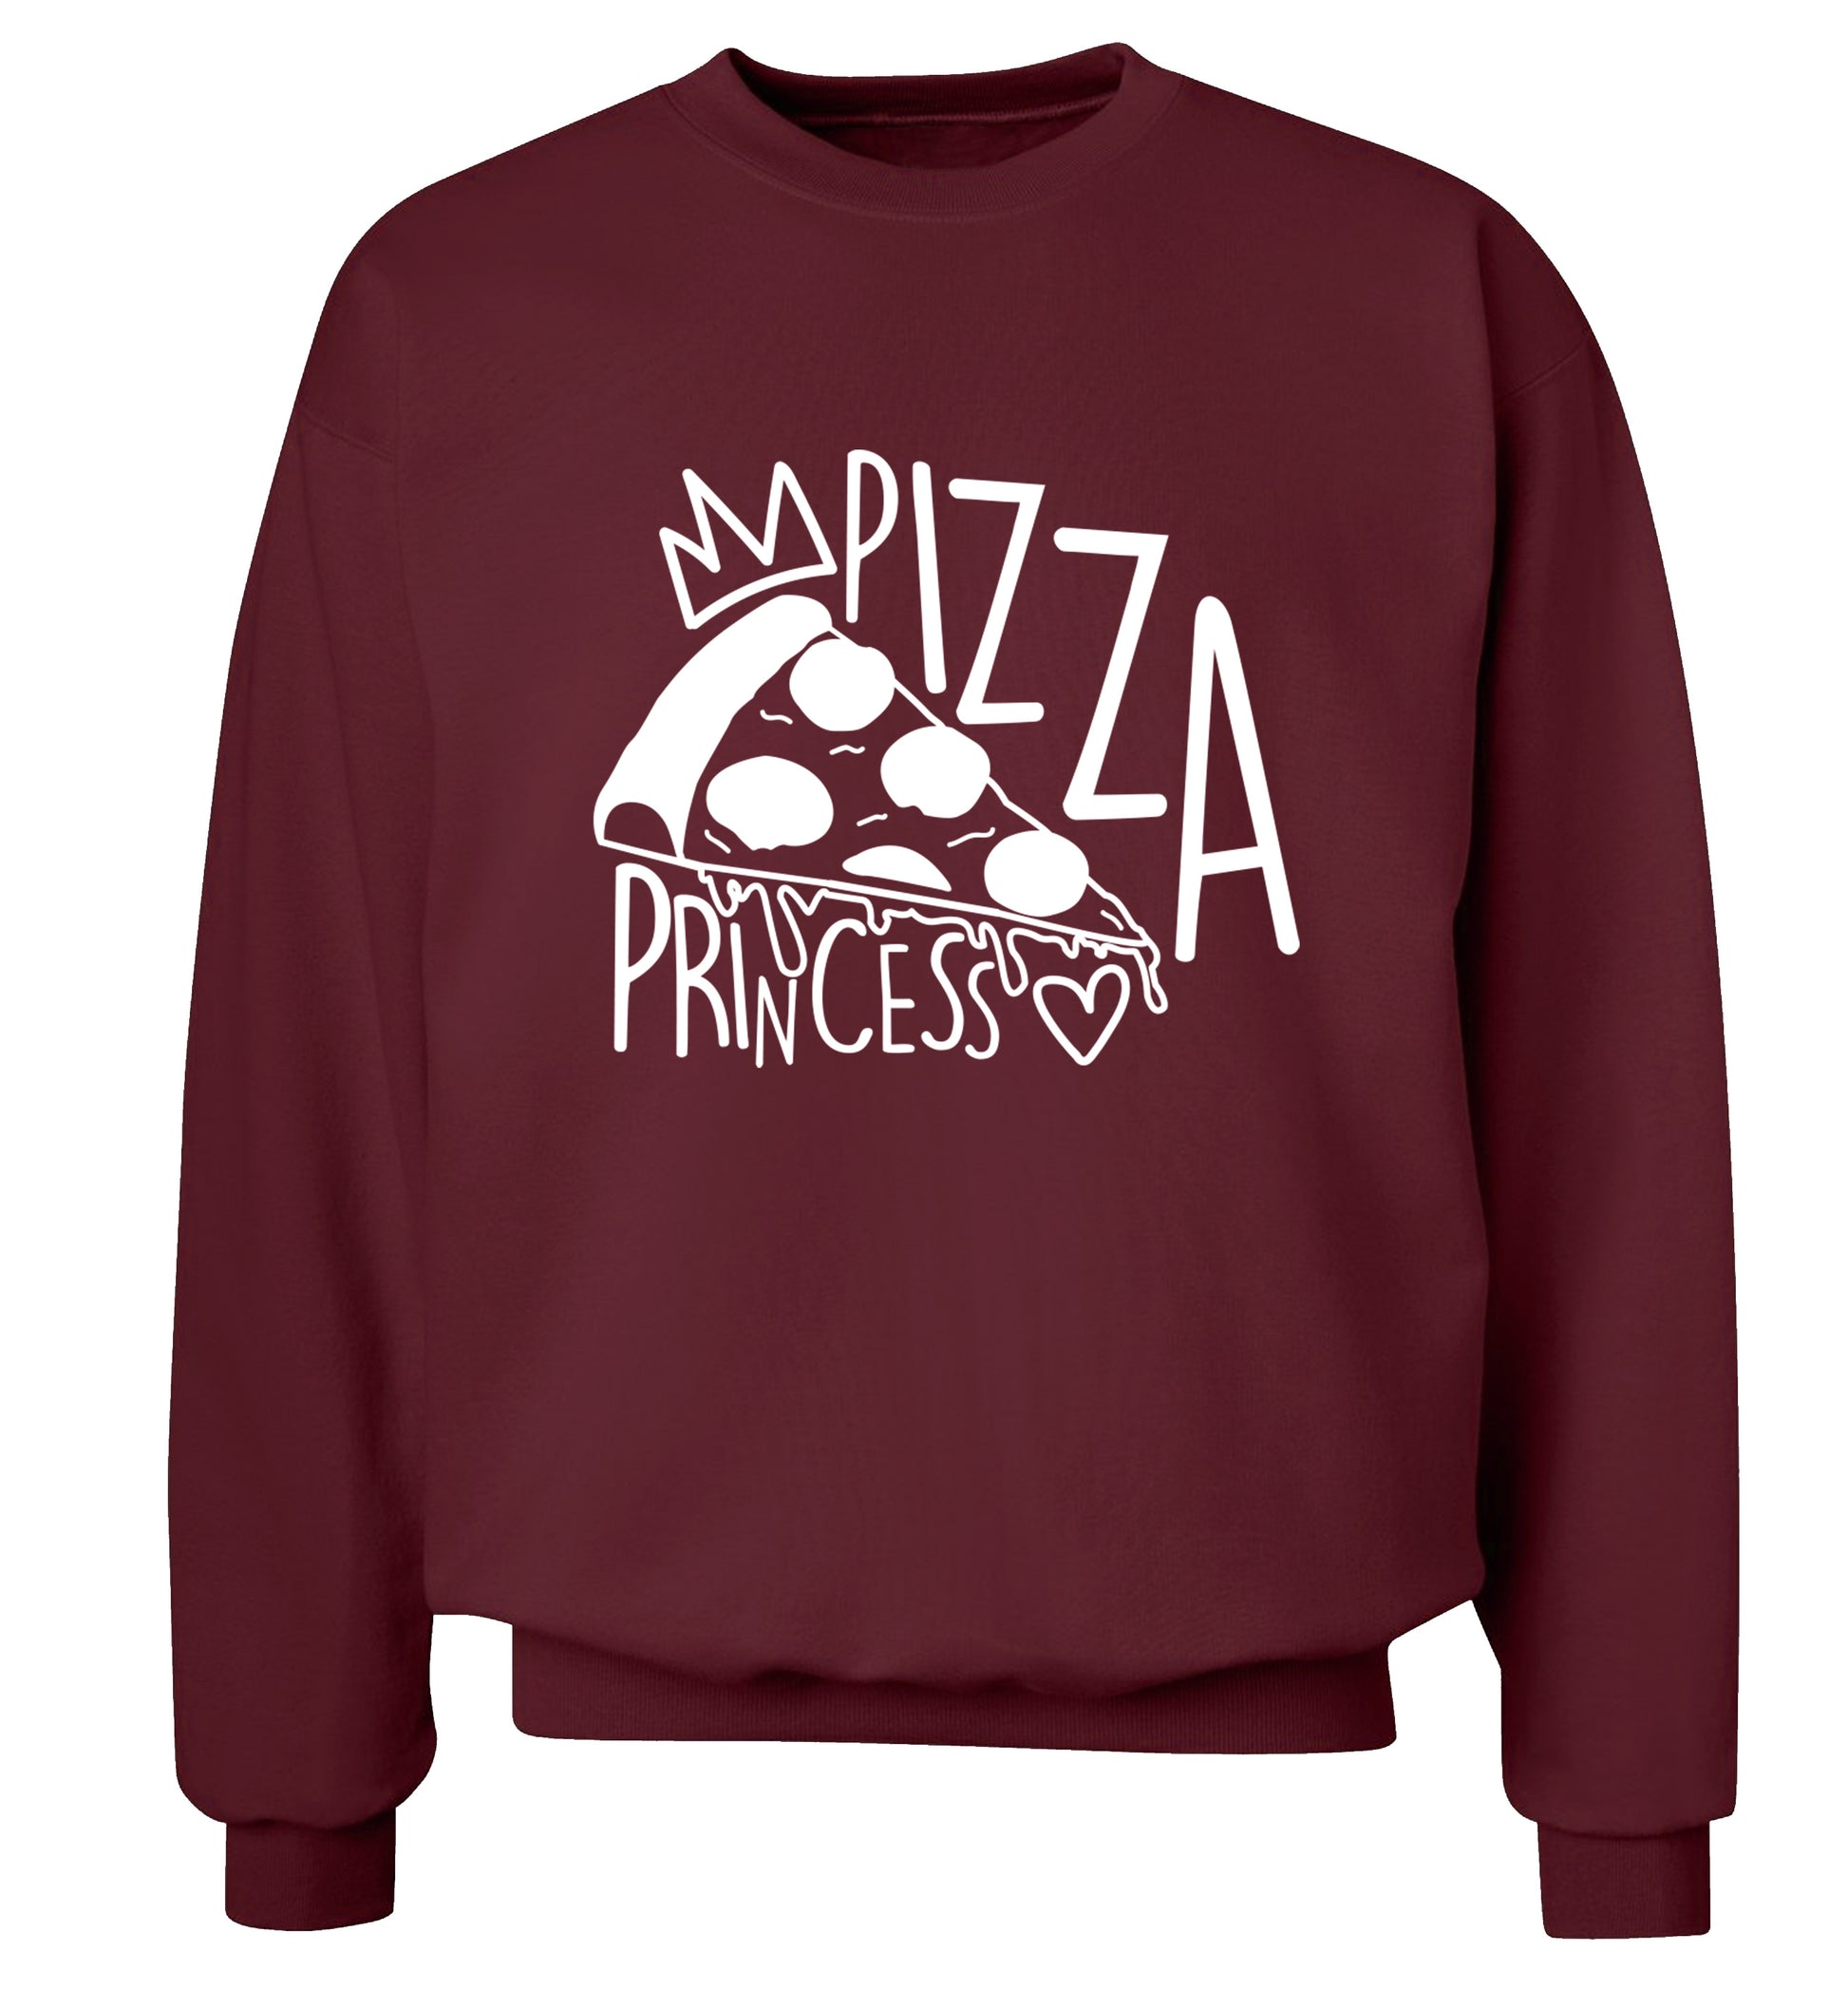 Pizza Princess Adult's unisex maroon Sweater 2XL